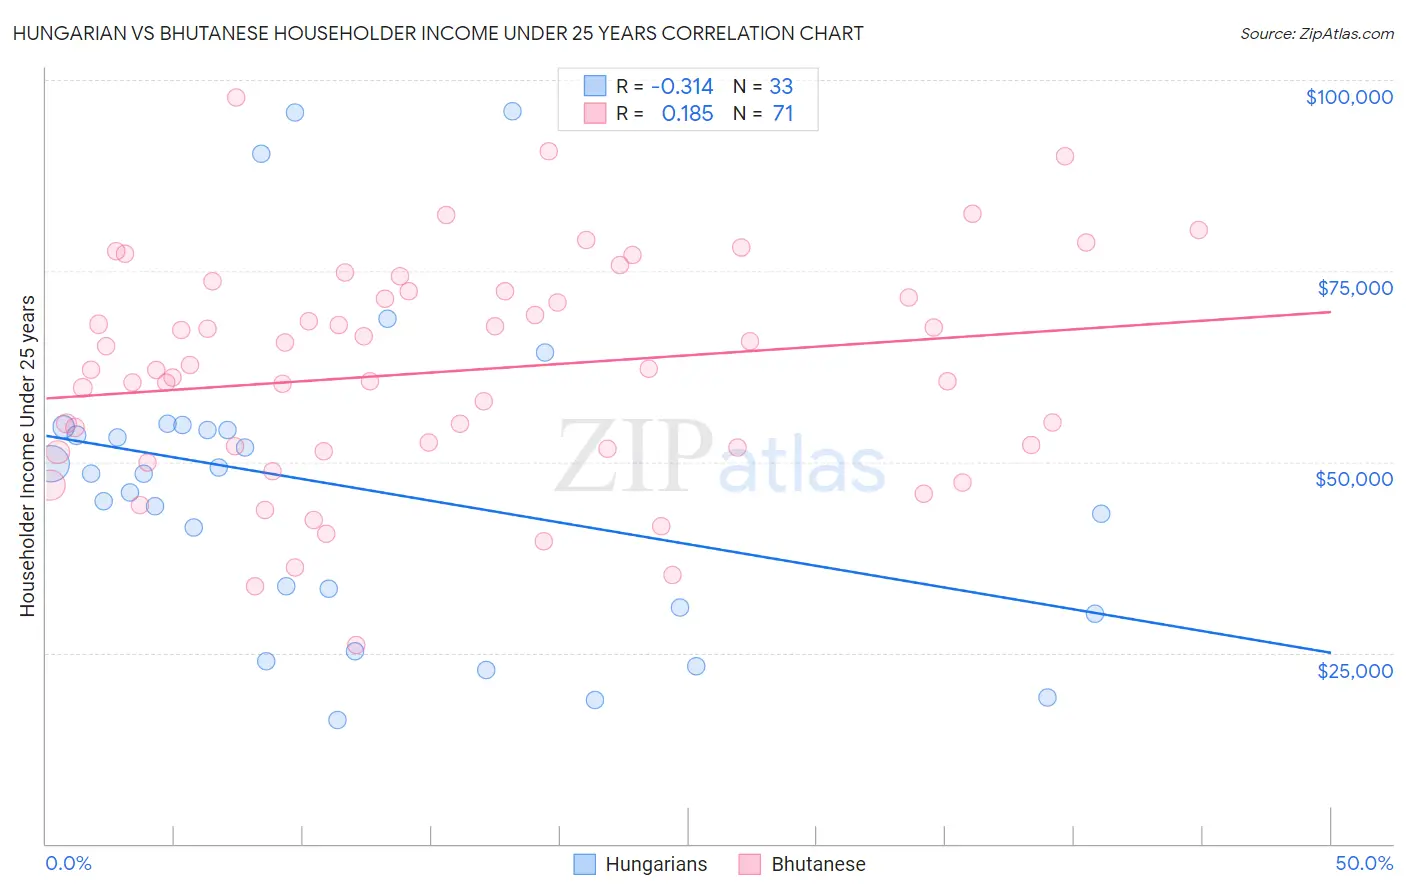 Hungarian vs Bhutanese Householder Income Under 25 years